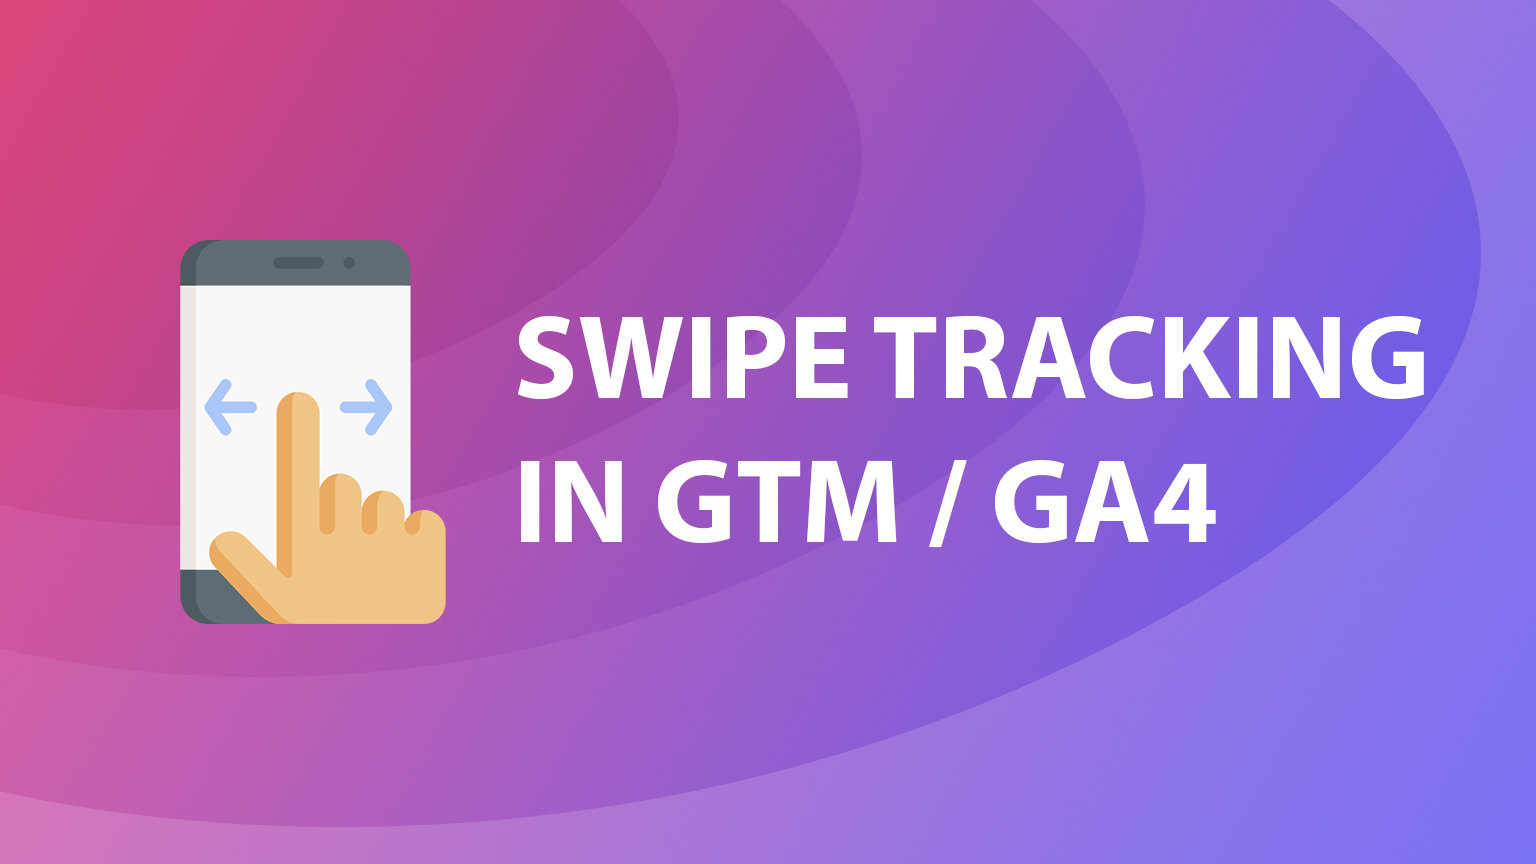 Swipe tracking in GTM and GA4